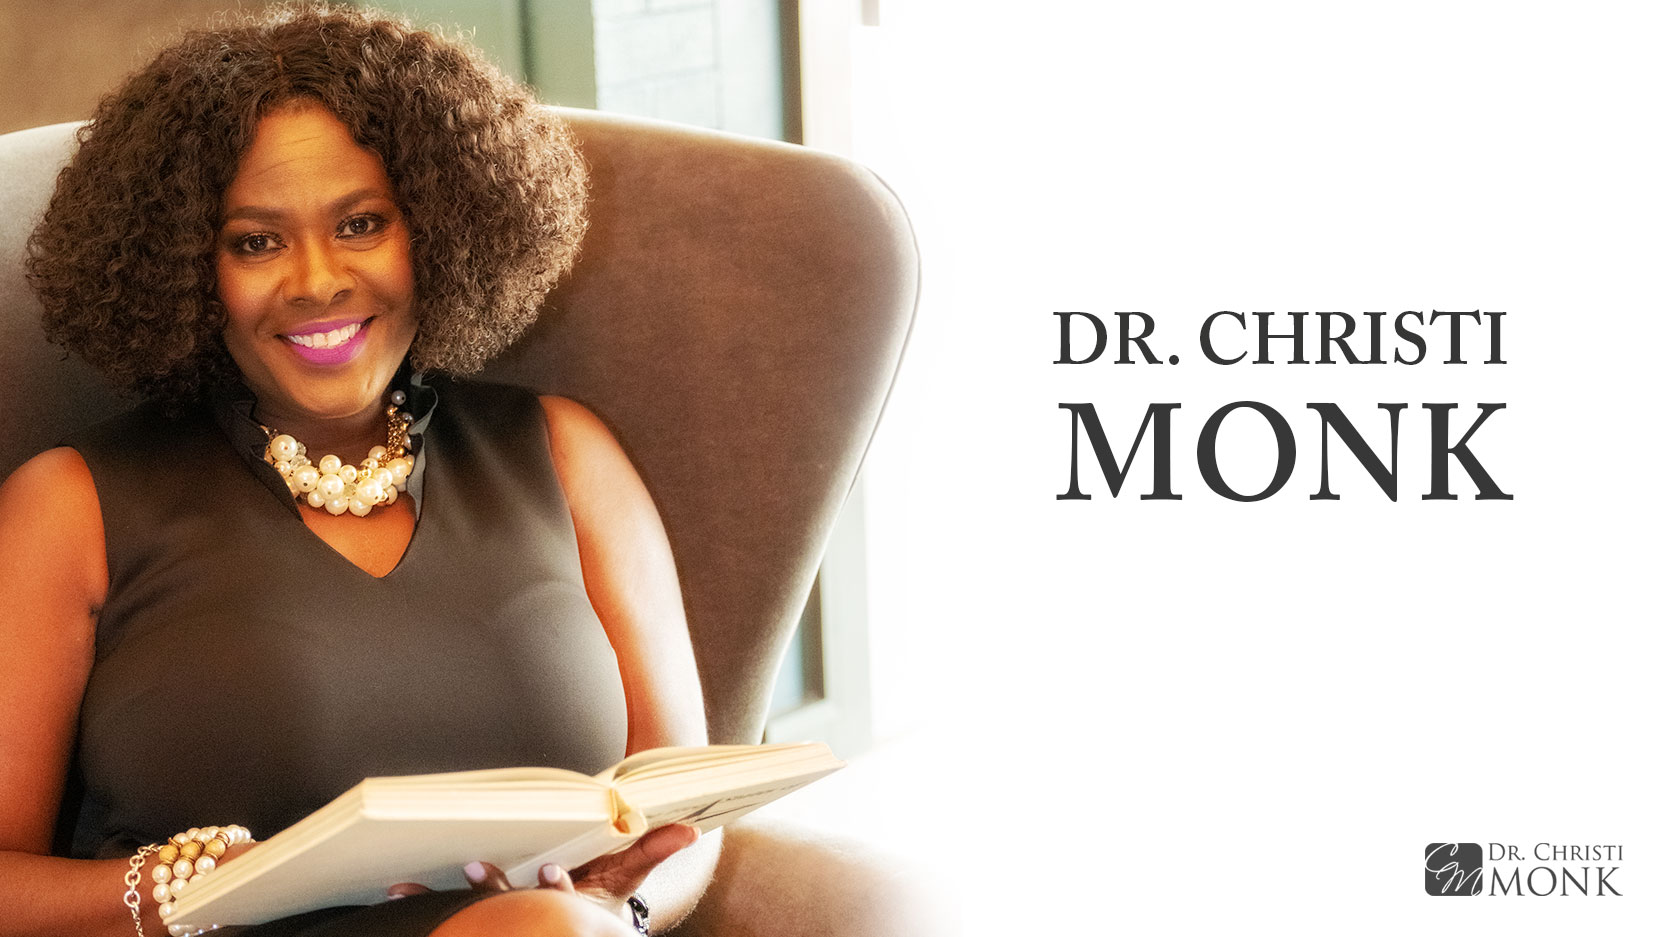 Dr. Christi Monk